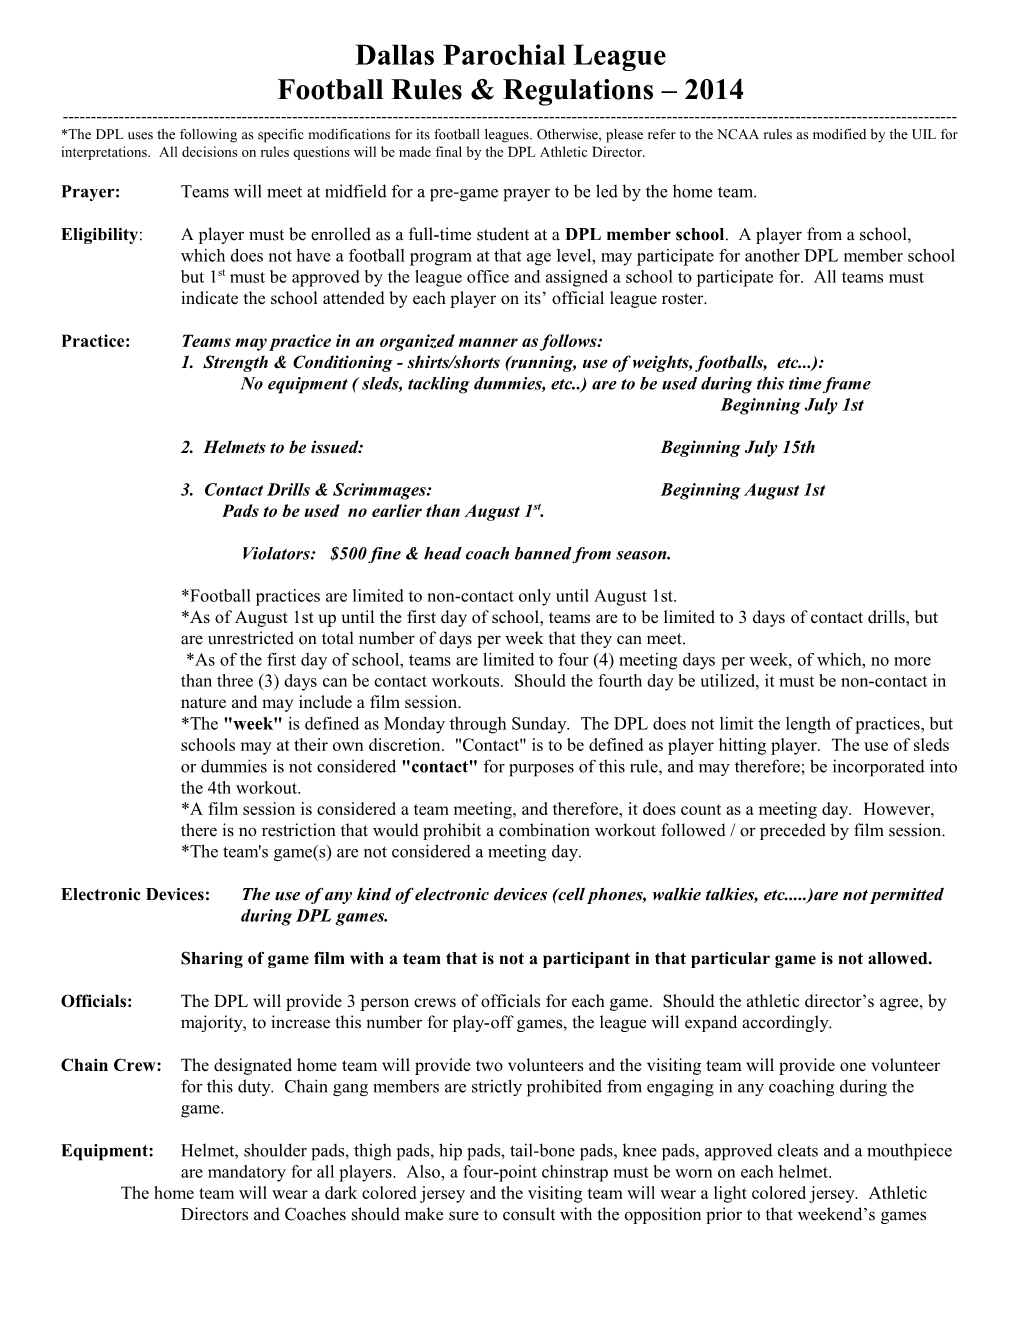 Dallas Parochial League Football Rules & Regulations